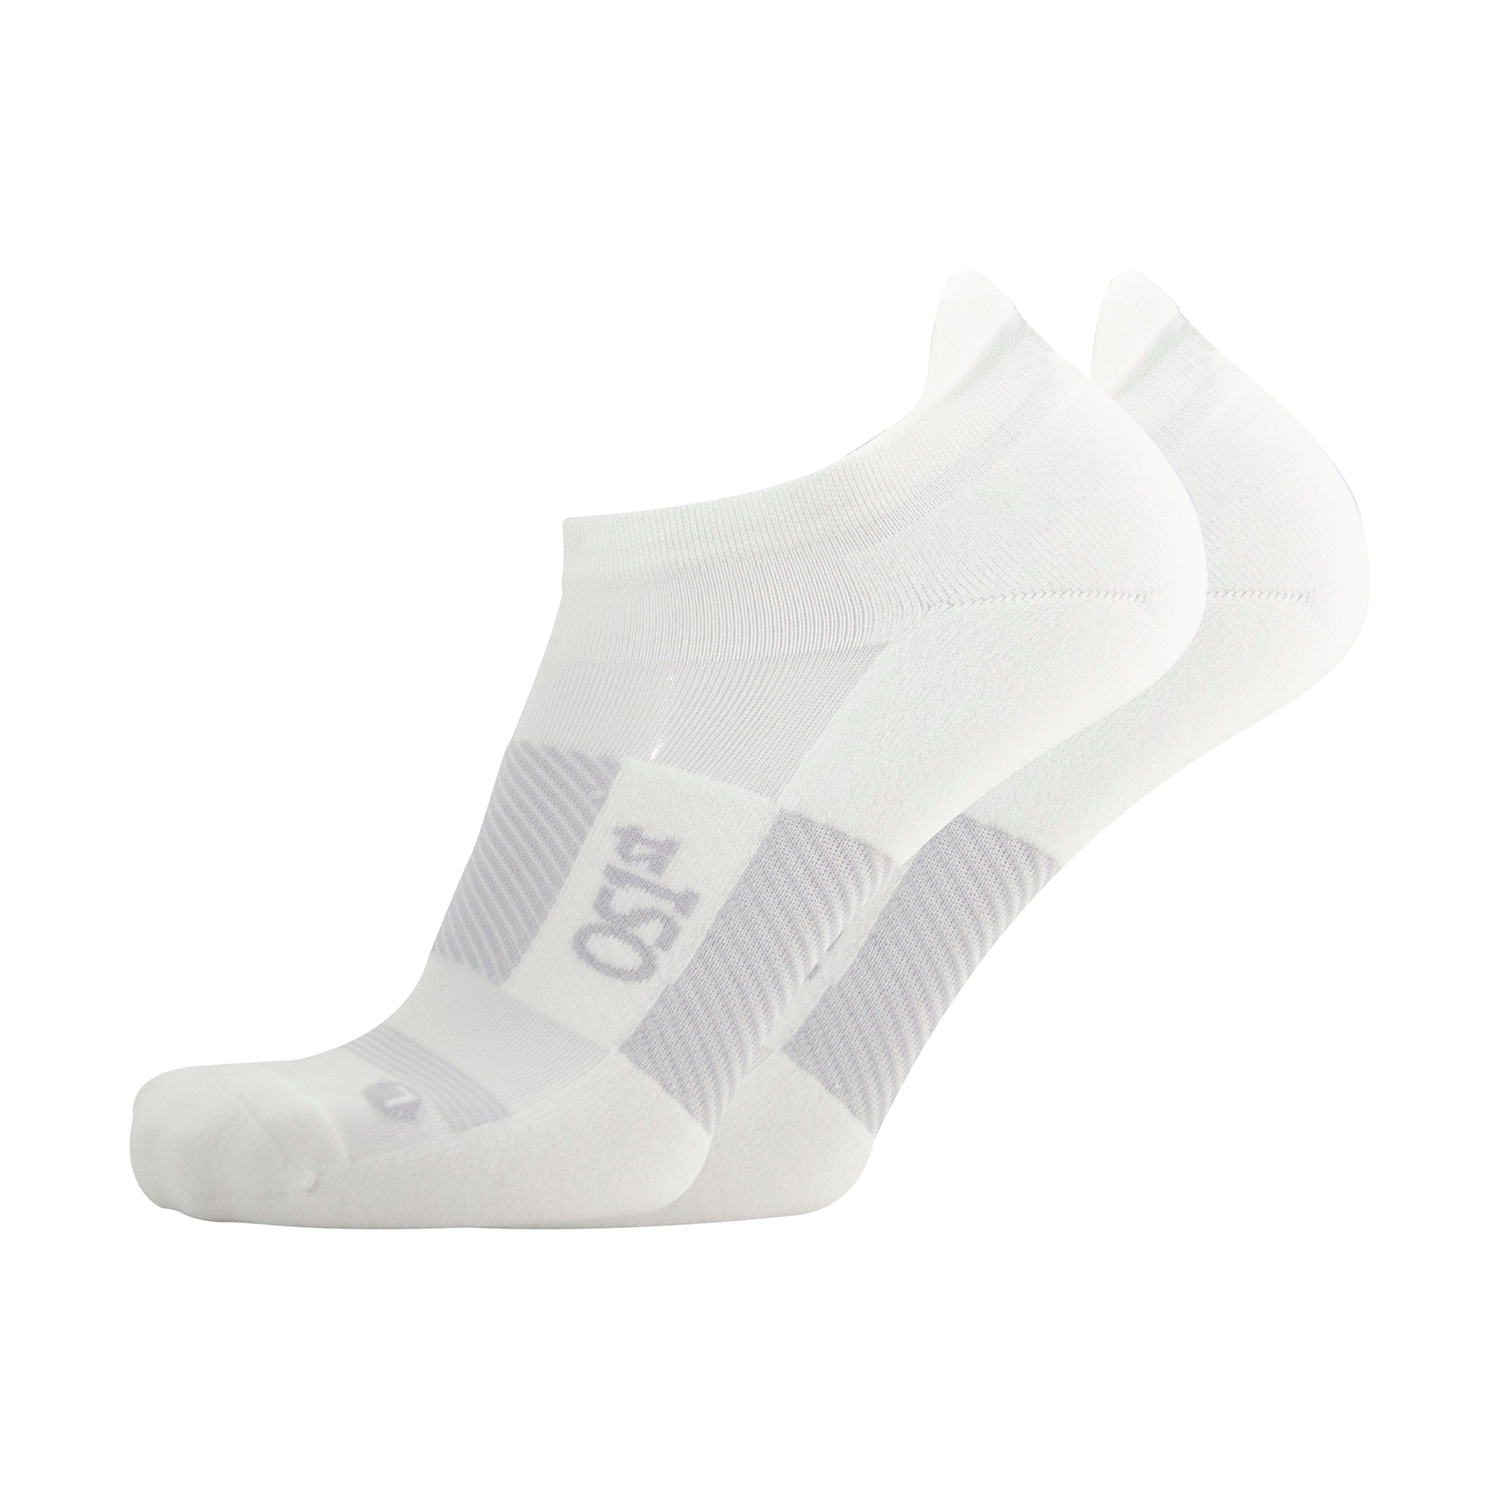 Thin air performance socks in white | OS1st